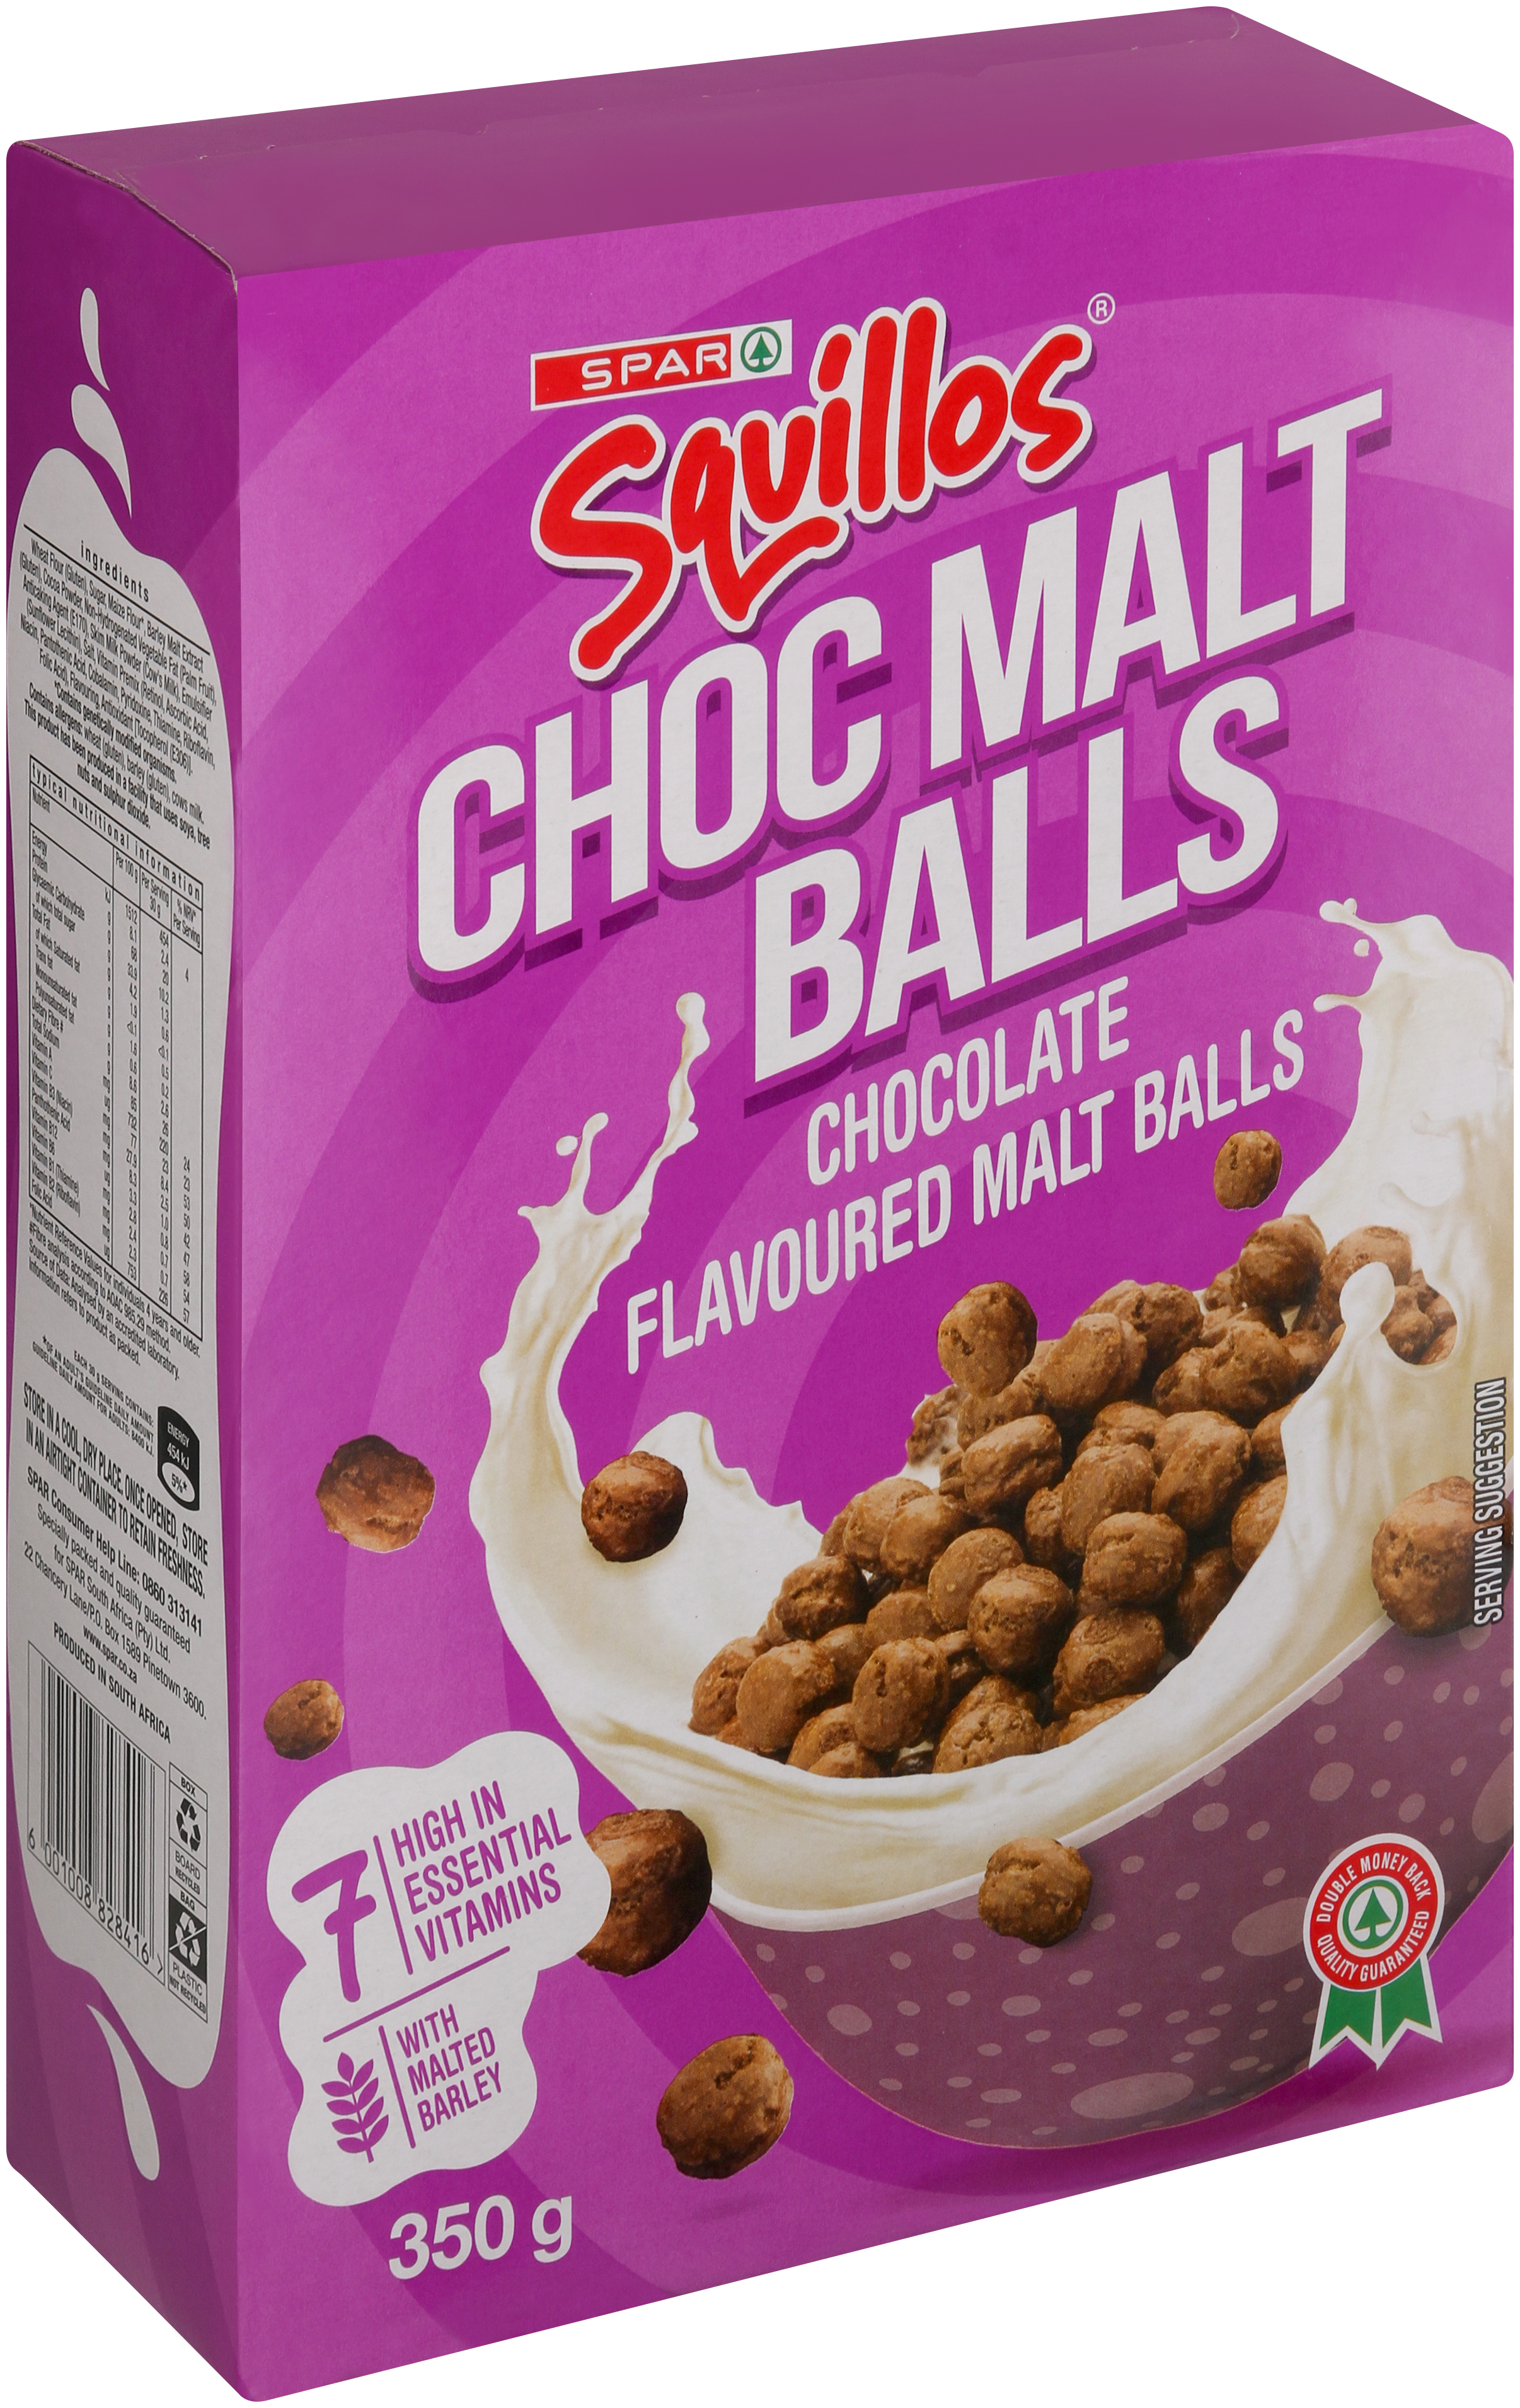 squillos choc malt balls